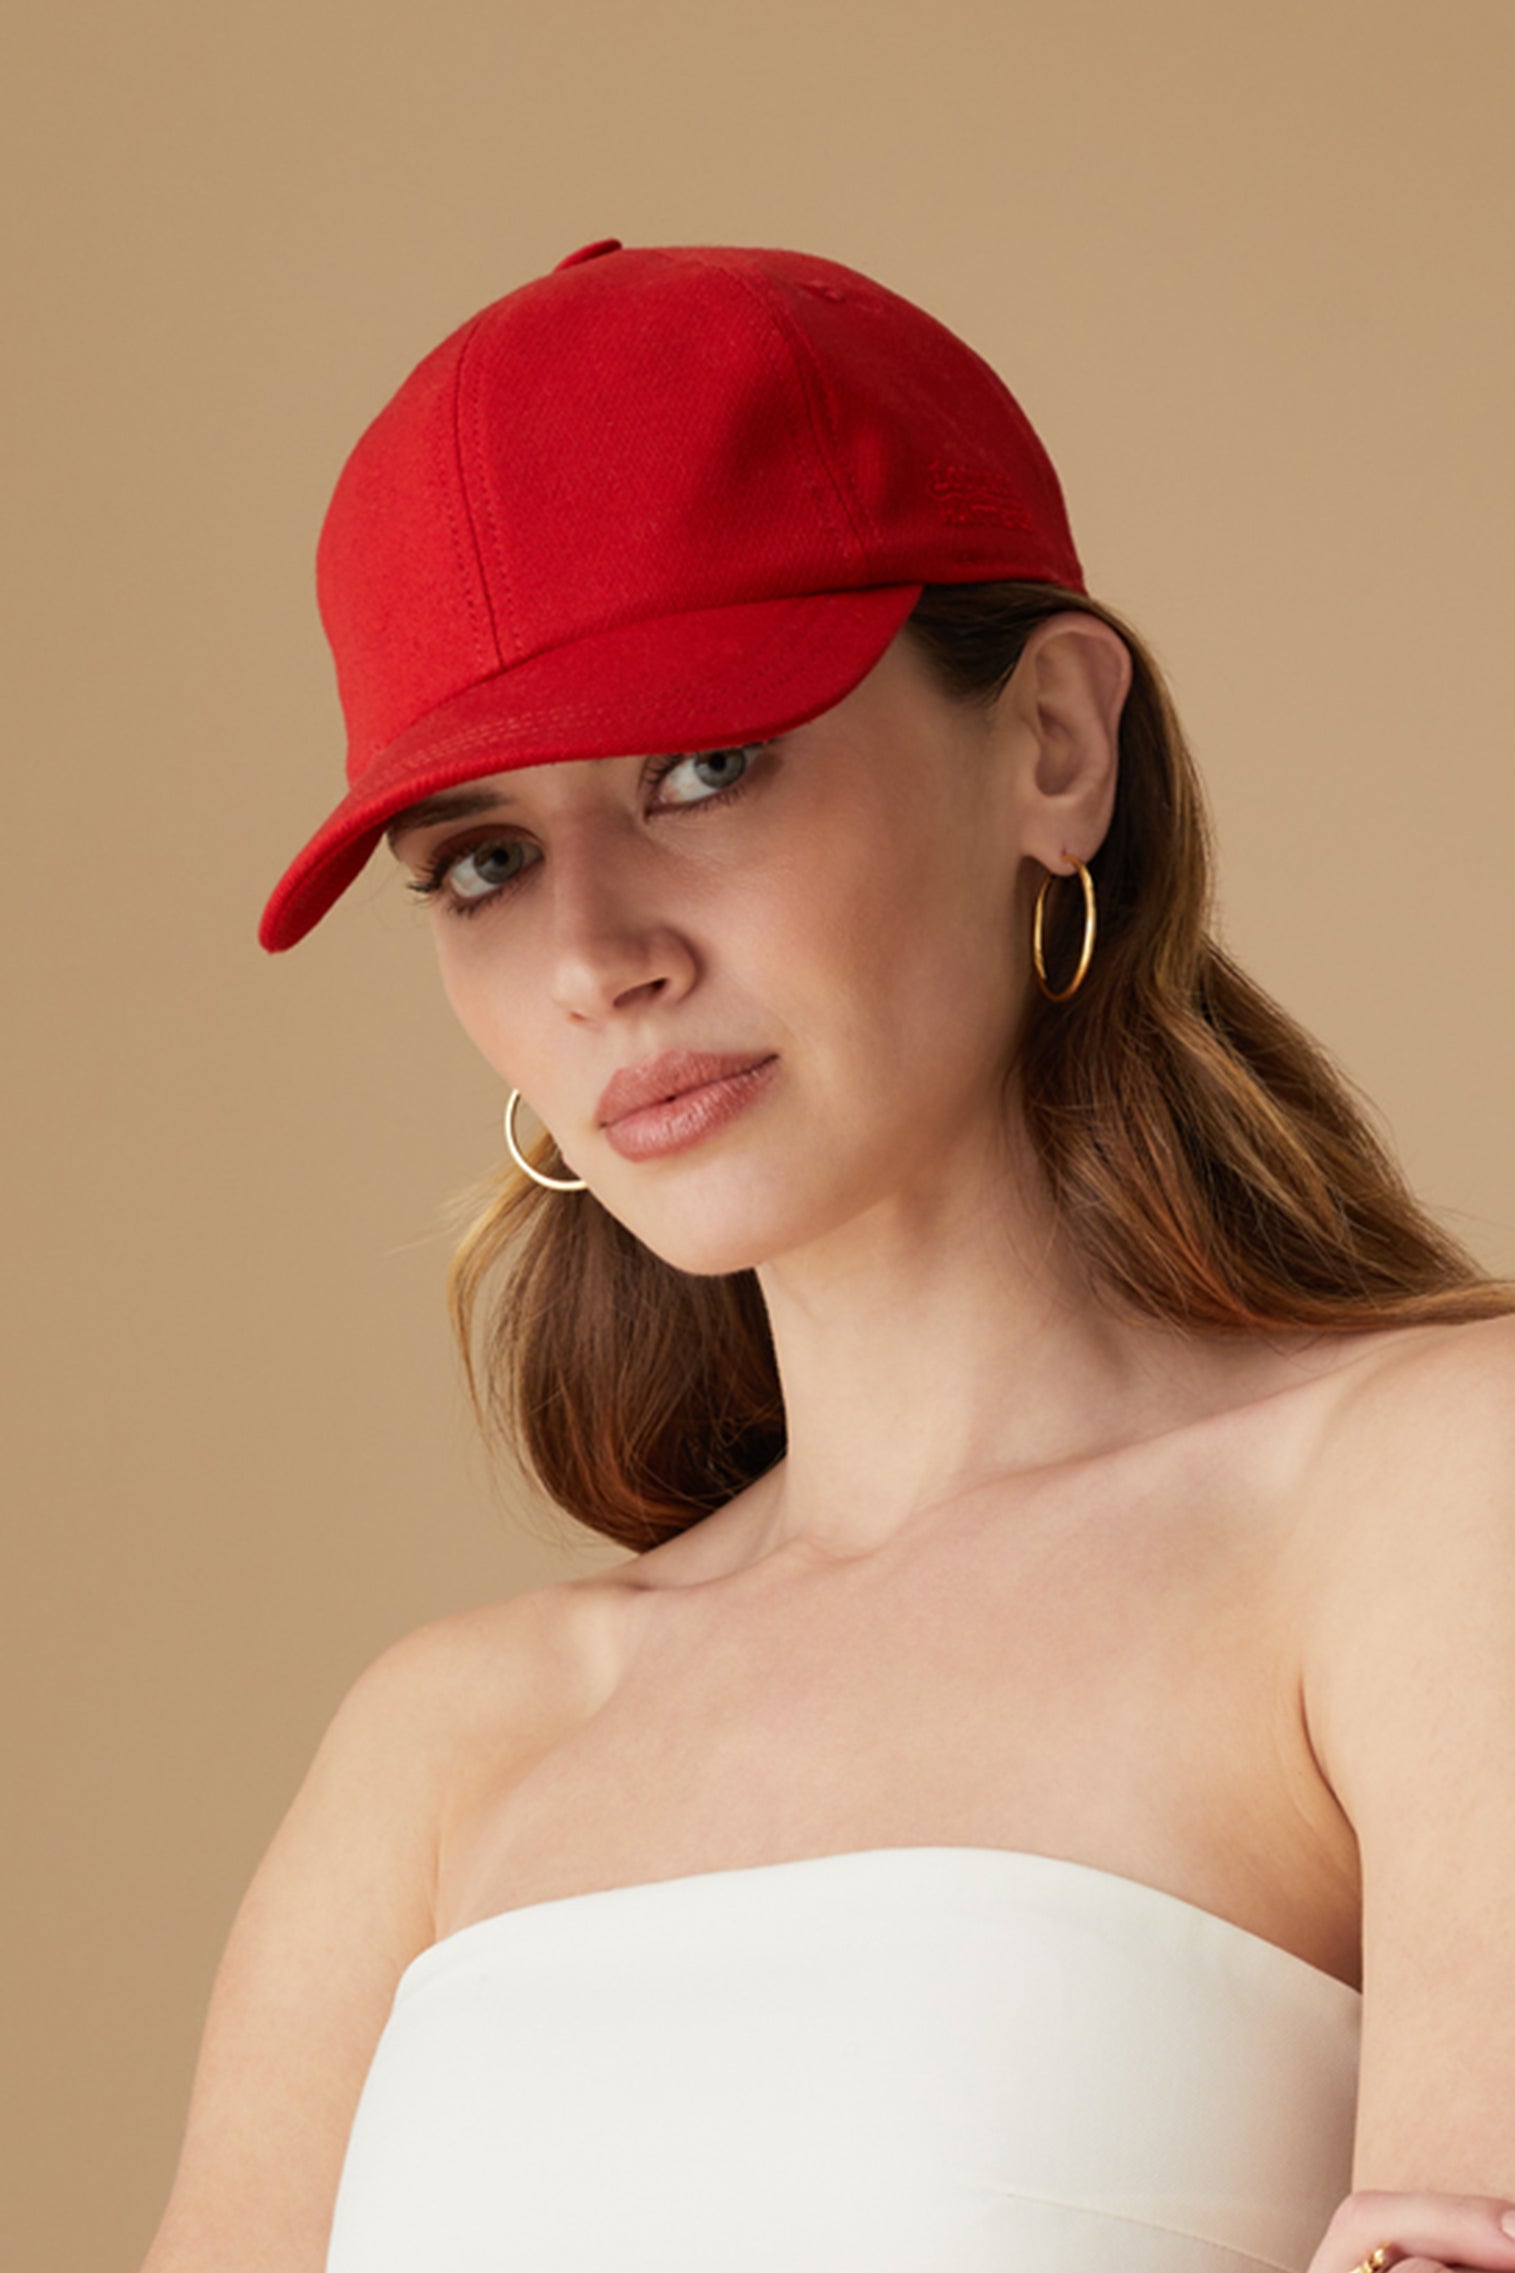 Adjustable Red Baseball Cap - Women's Caps - Lock & Co. Hatters London UK